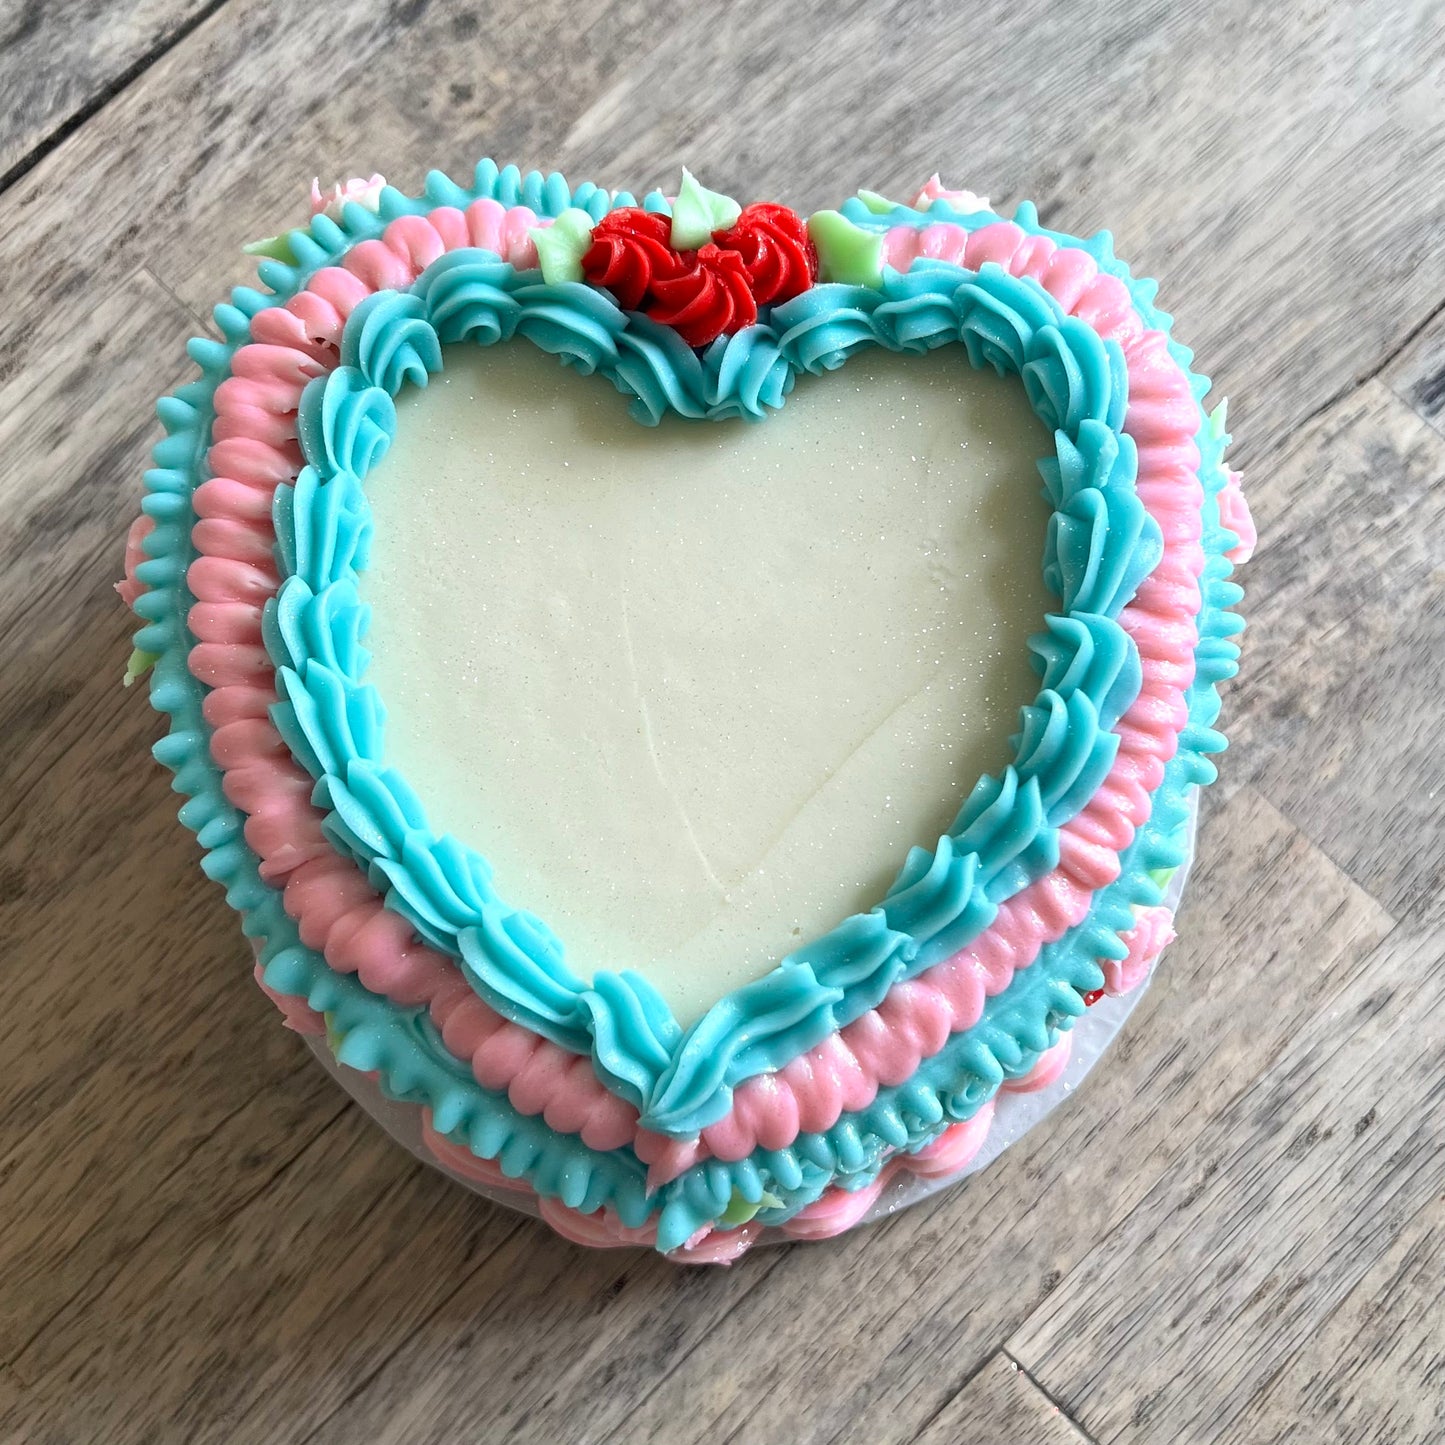 🎀The Lady Godiva Fancypants Heart Cake!🎀